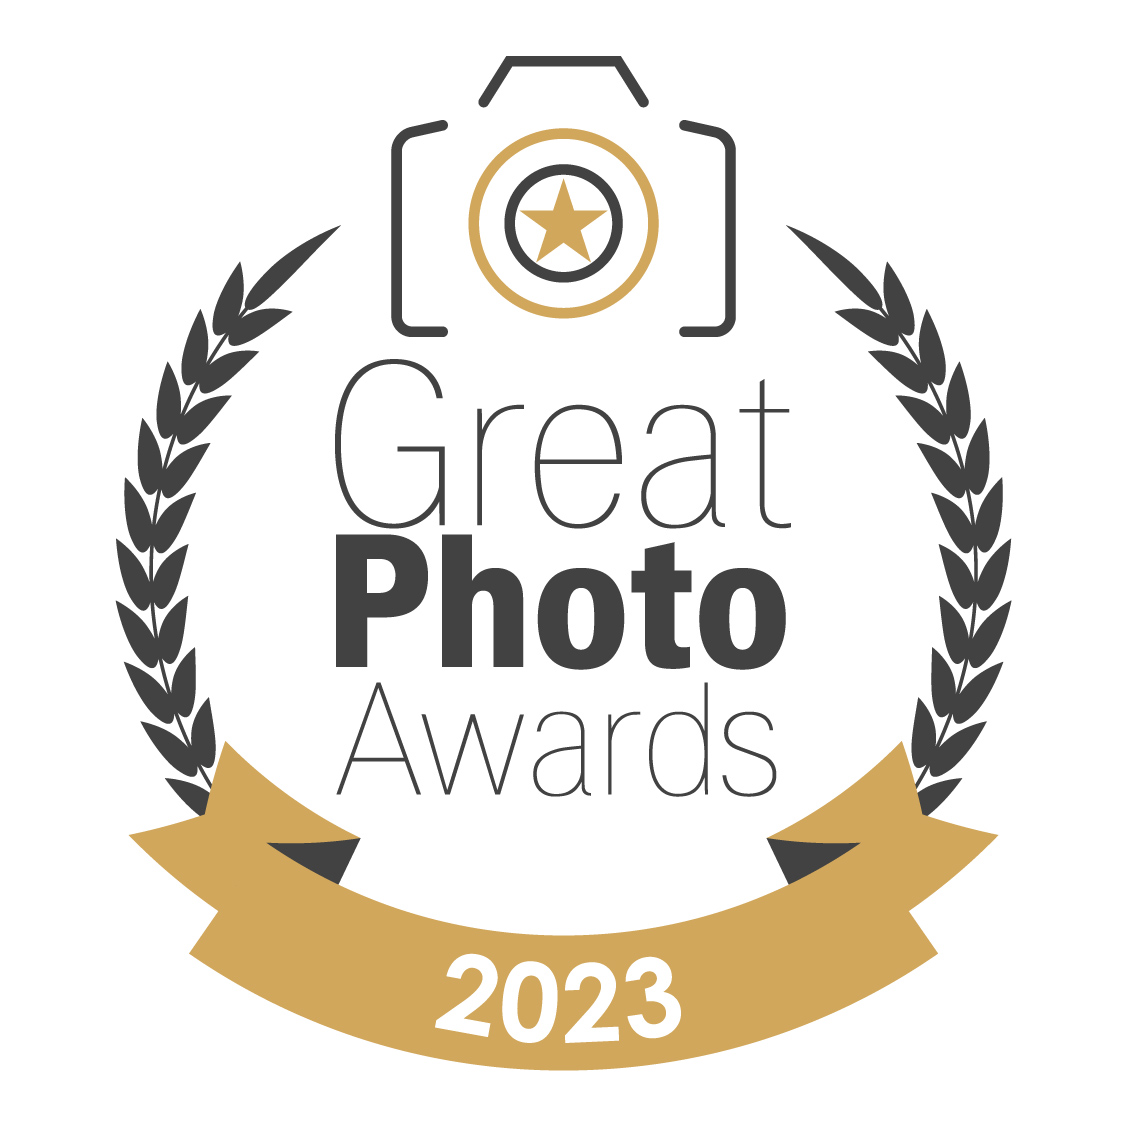 Great Photo Awards 2023 - logo